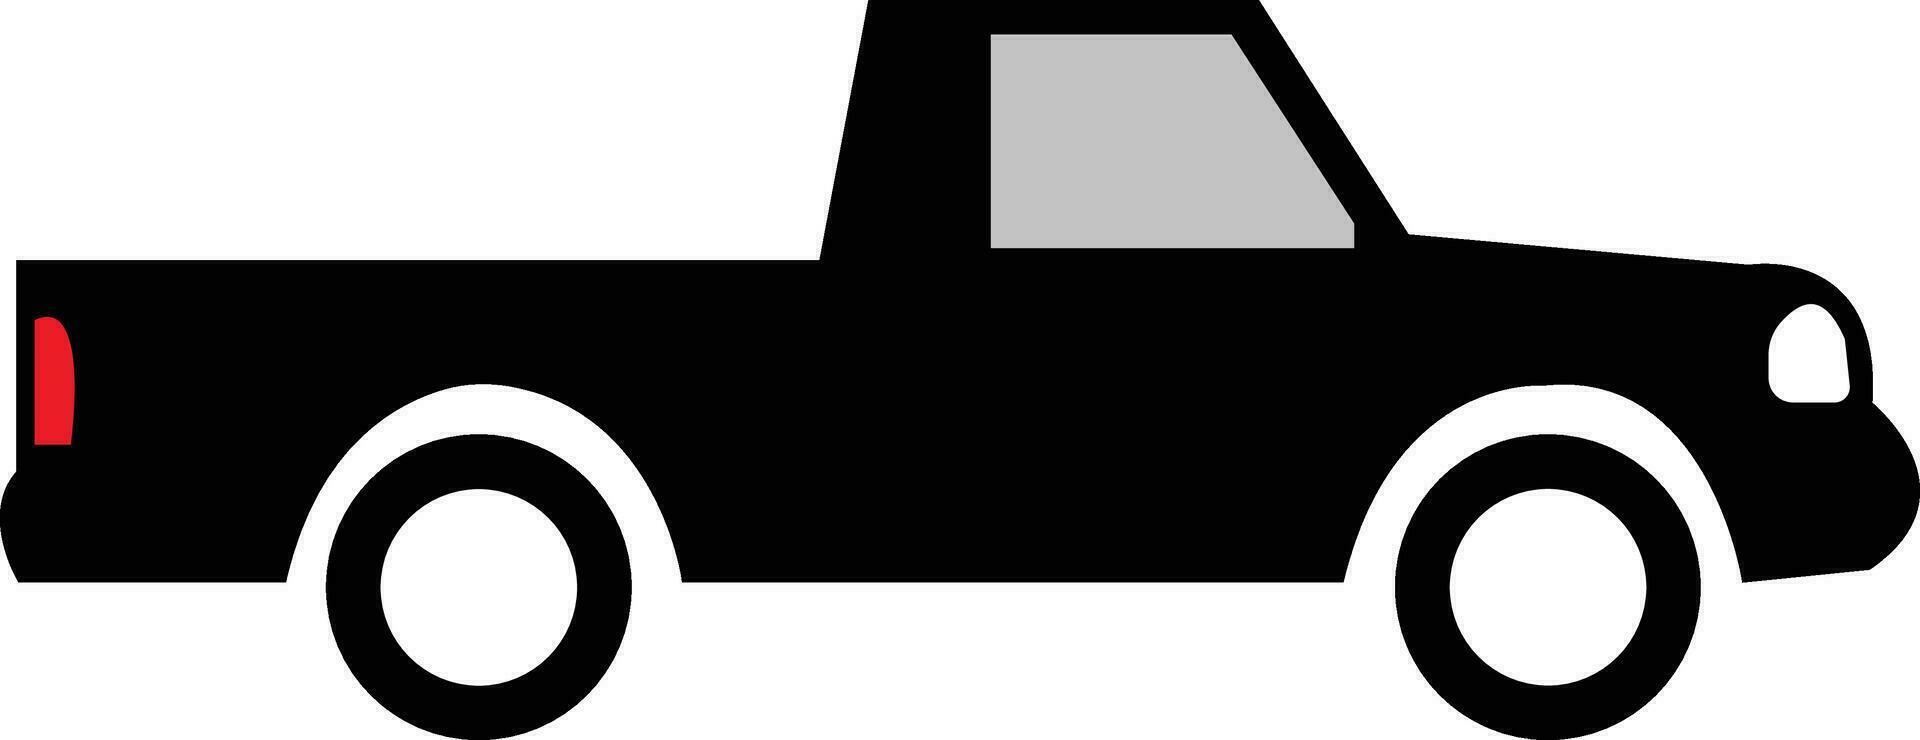 coche silueta automóvil vehículo en negro vector